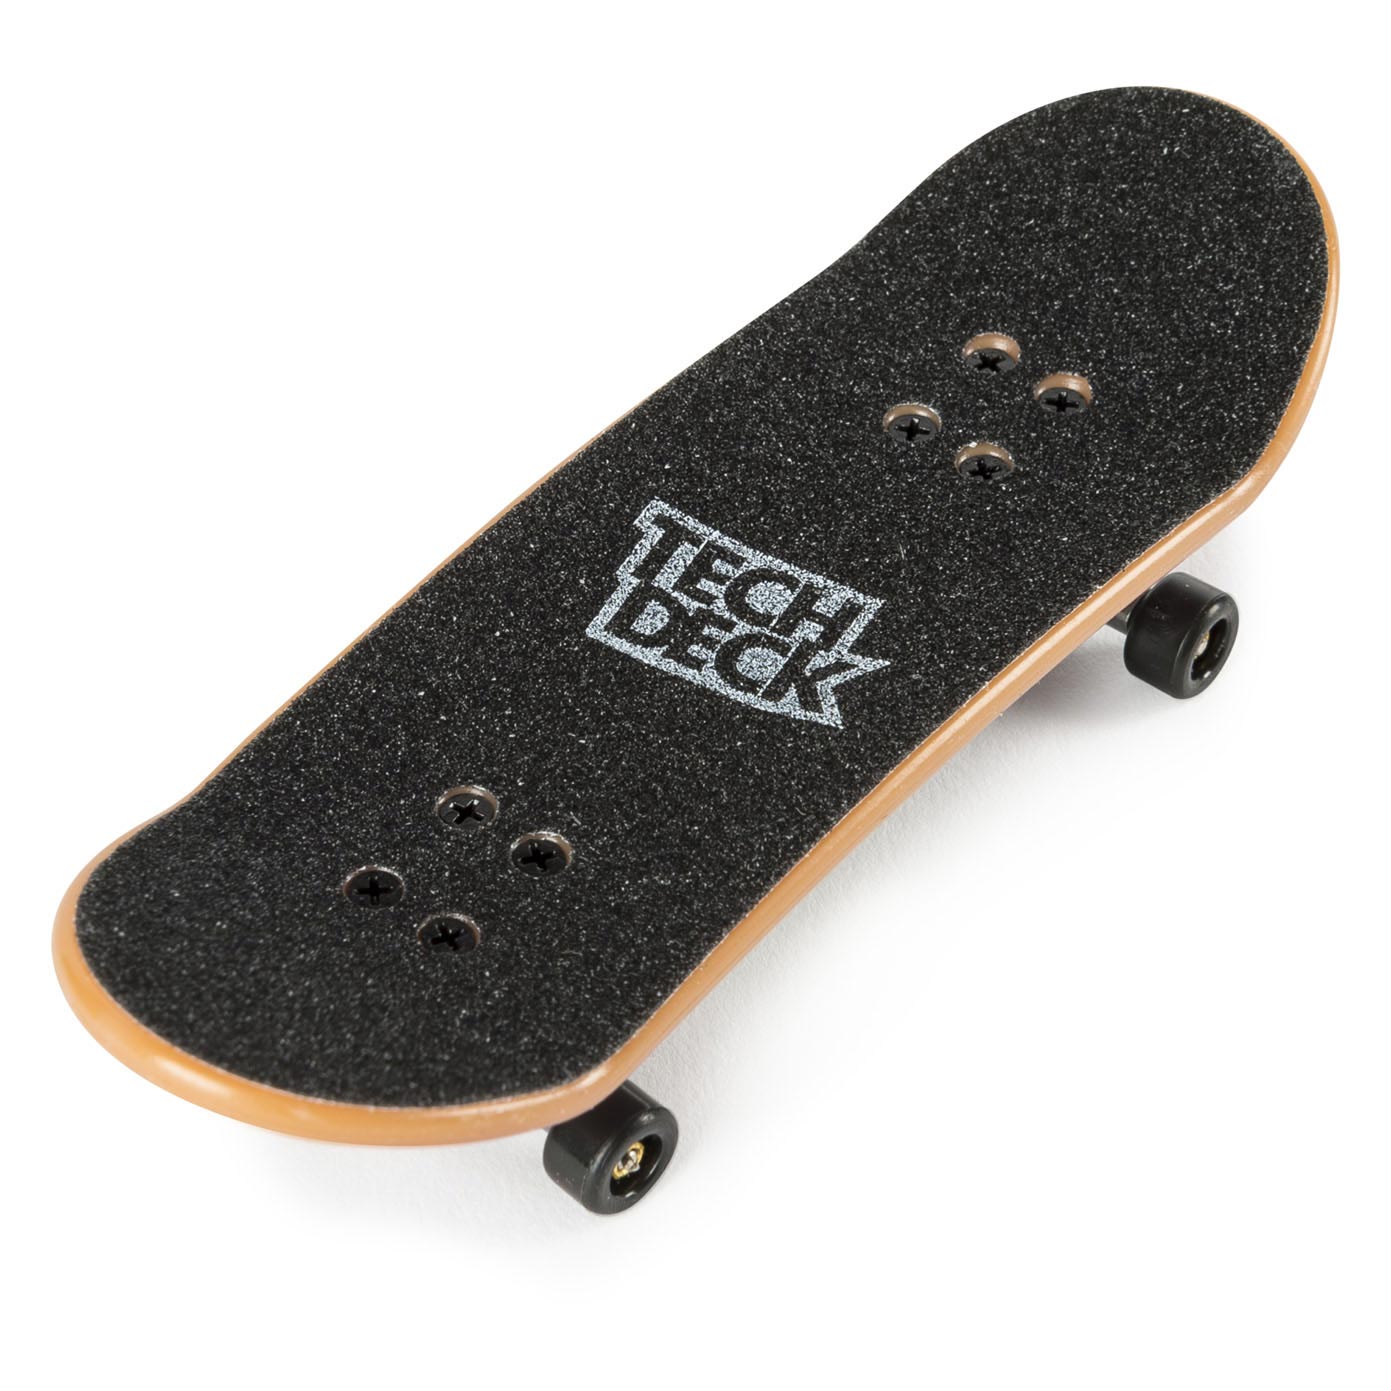 Tech Deck – Finger-Skateboard